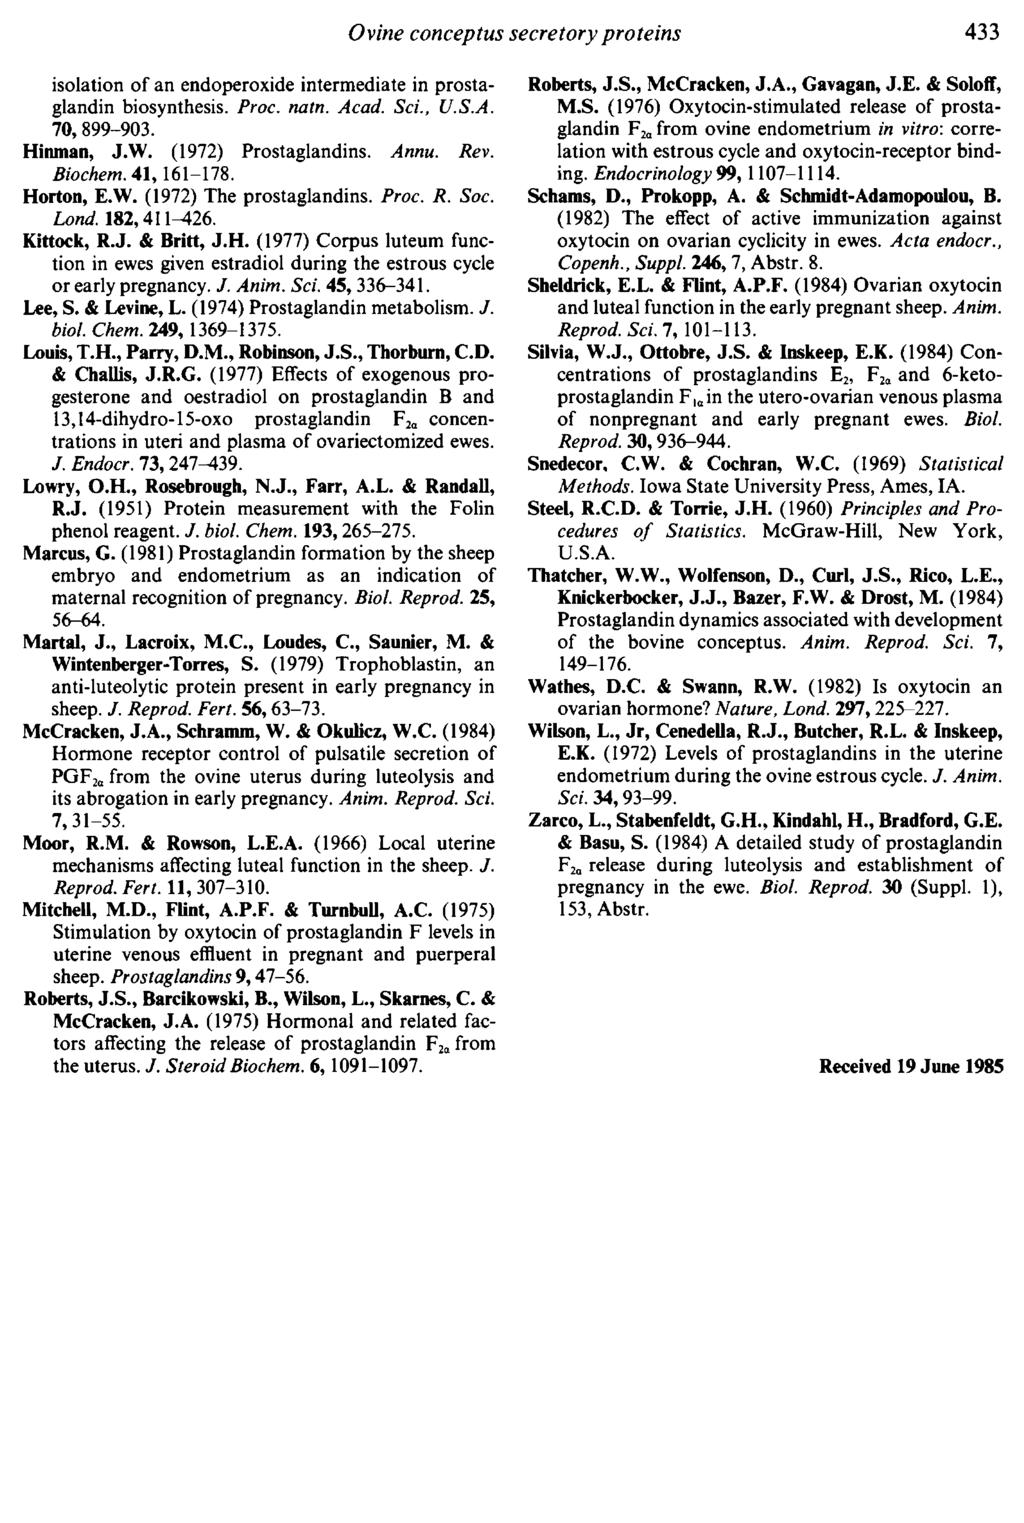 isolation of an endoperoxide intermediate in prosta glandin biosynthesis. Proc. natn. Acad. Sci., U.S.A. 70,899-903. llinman, J.W. (1972) Prostaglandins. Annu. Rev. Biochem. 41, 161-178. Horten, E.W. (1972) The prostaglandins.